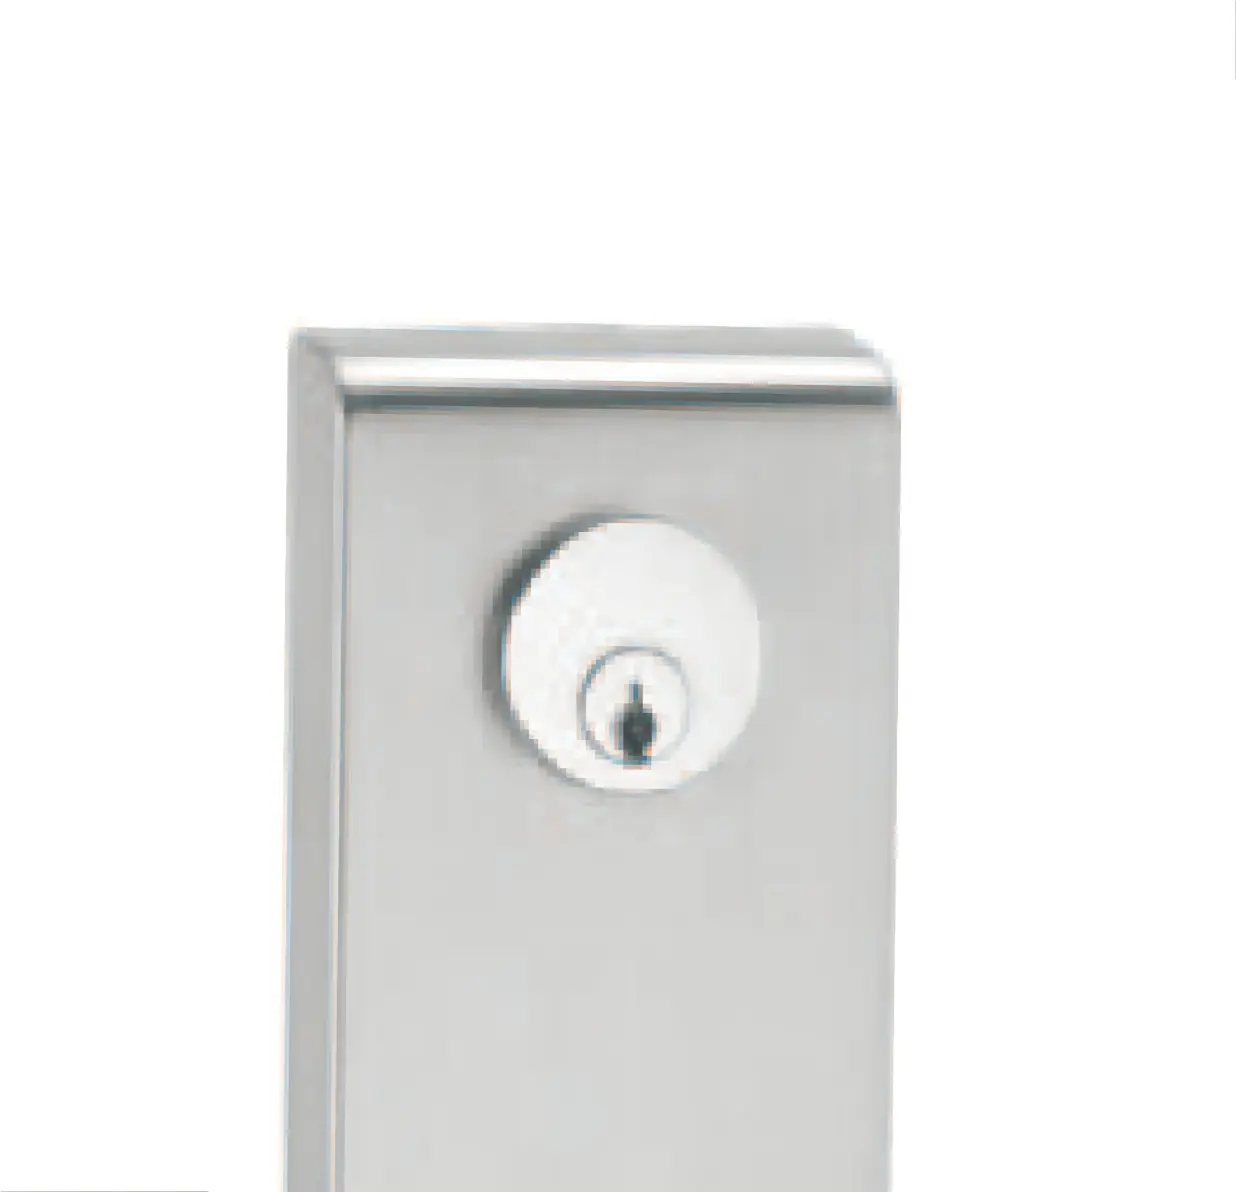 Stainless Steel Door Handle Fire Rated Door Lock Outside Trim Lock For Panic Exit Device